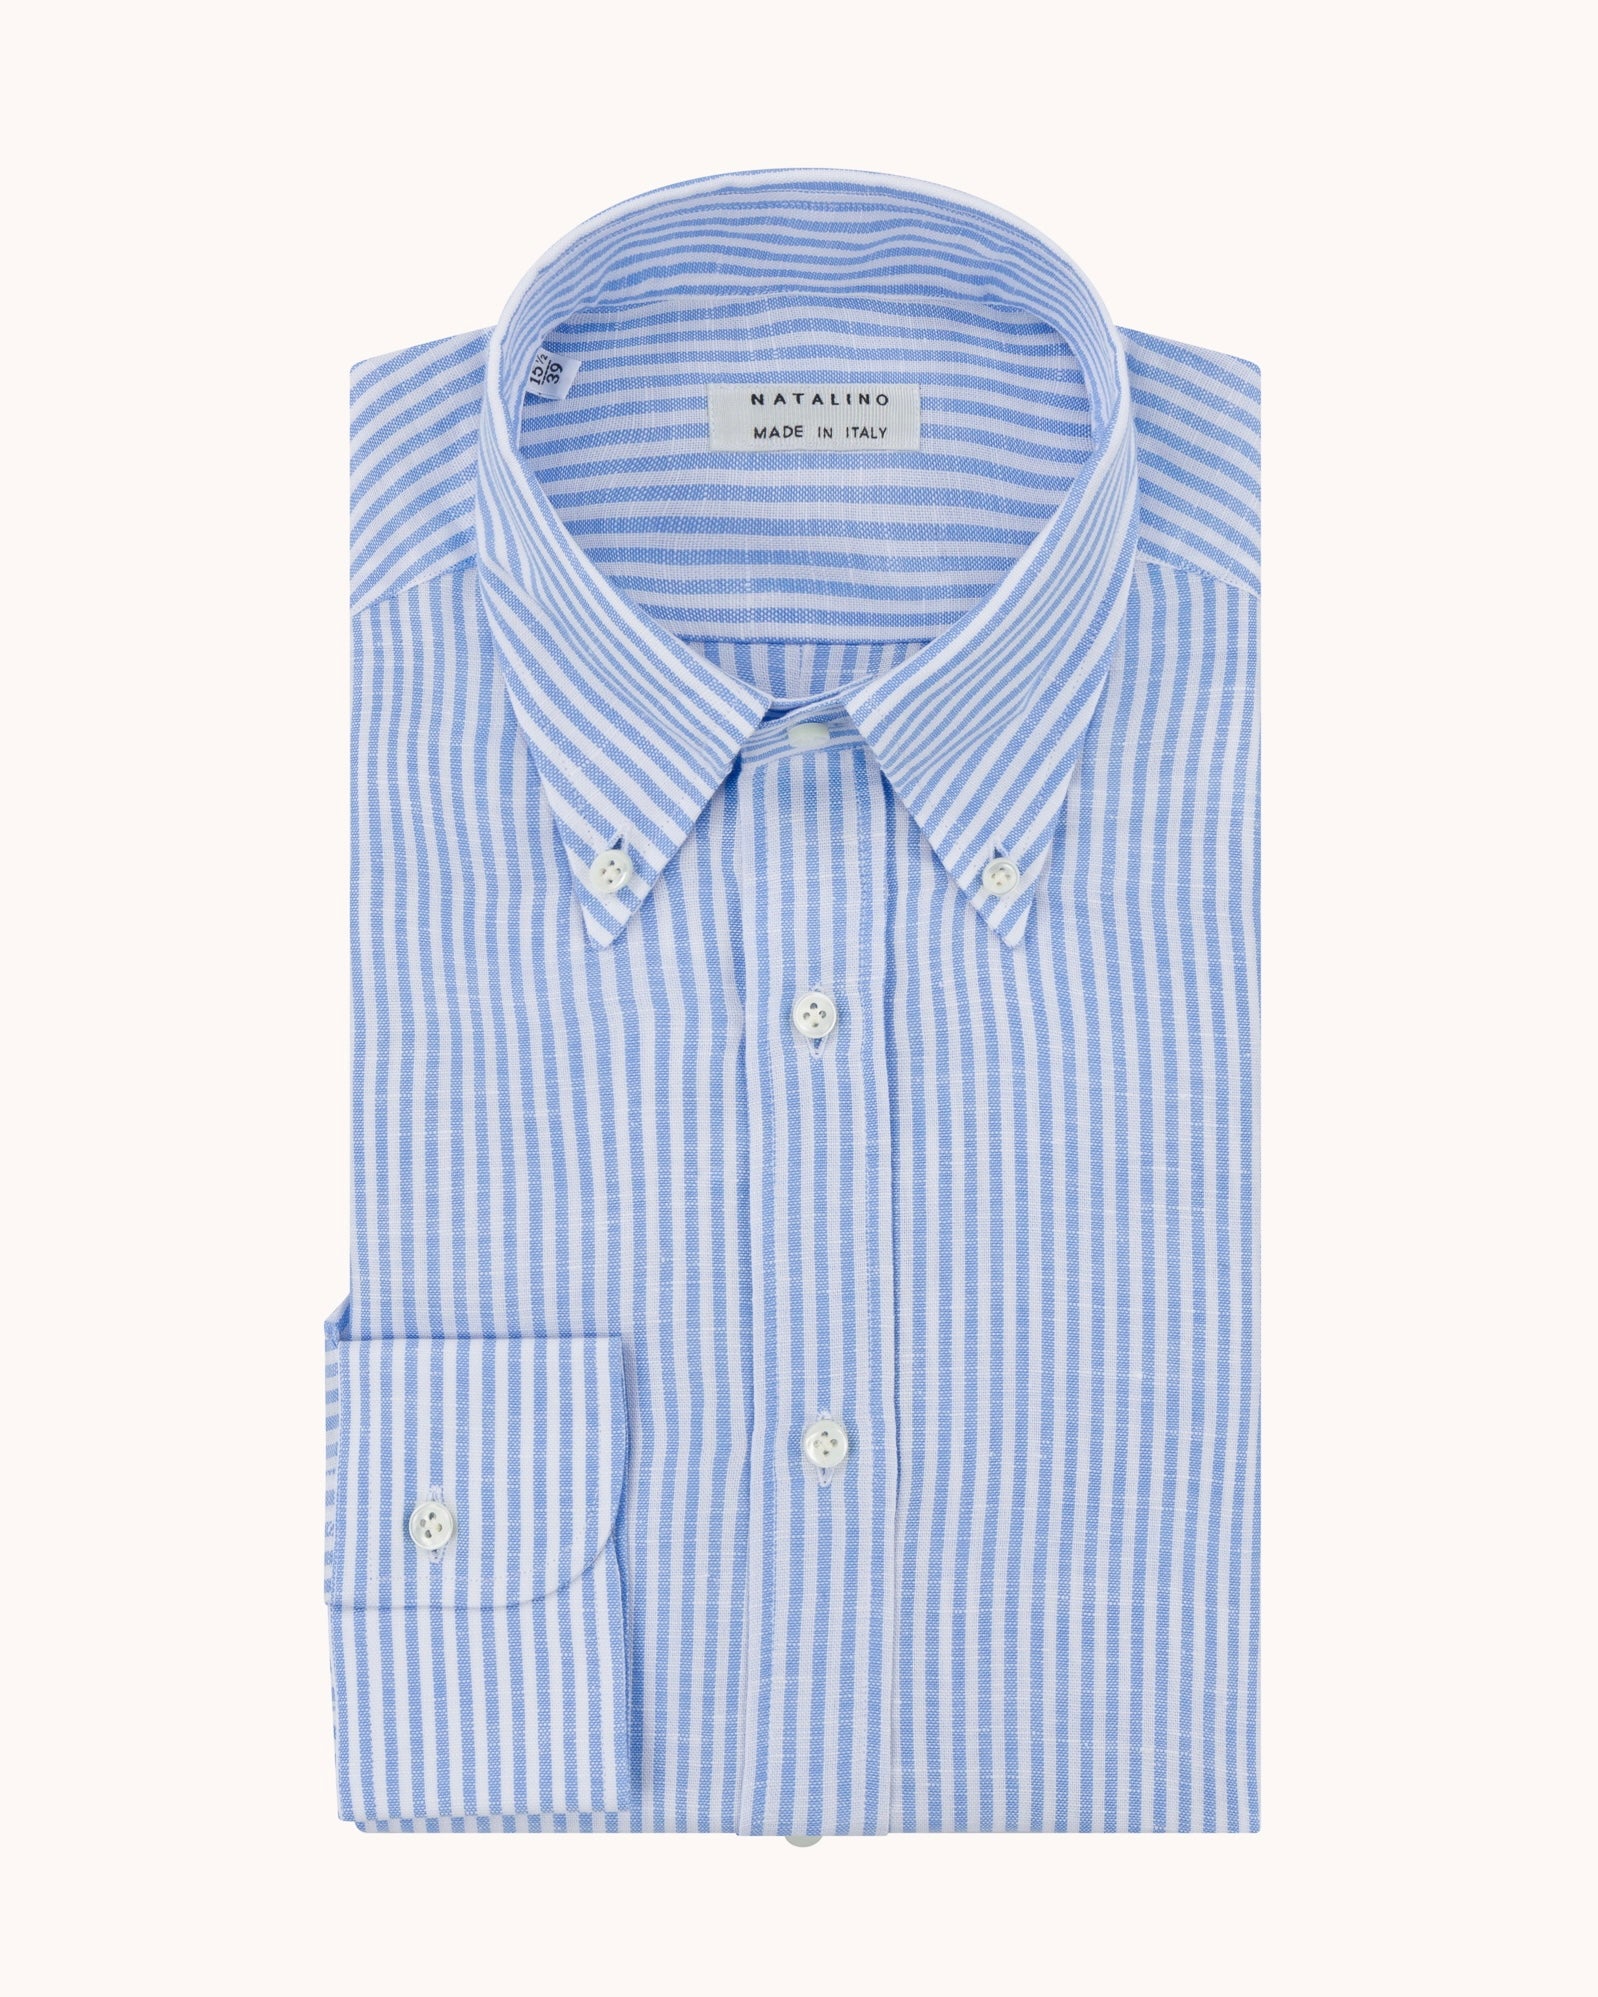 Button Down Collar Shirt - Blue Stripe Cotton Linen